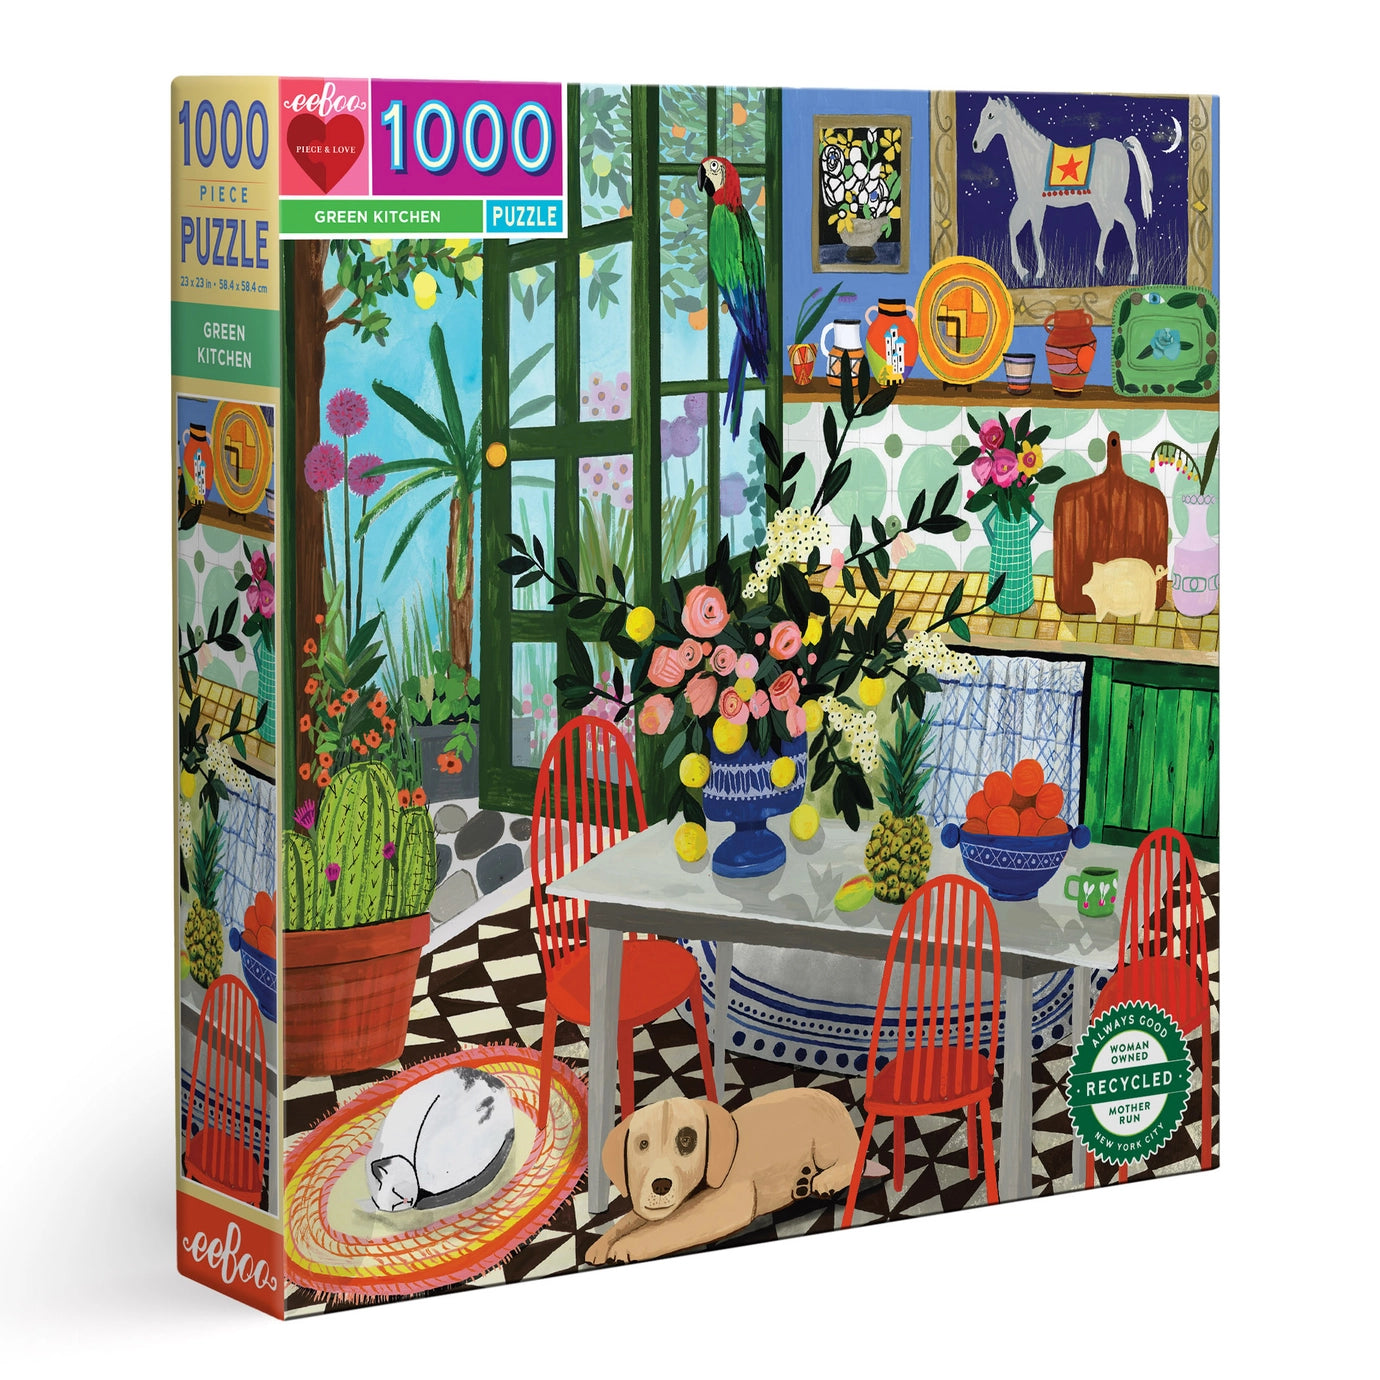 Green Kitchen 1000 Piece Square Puzzle